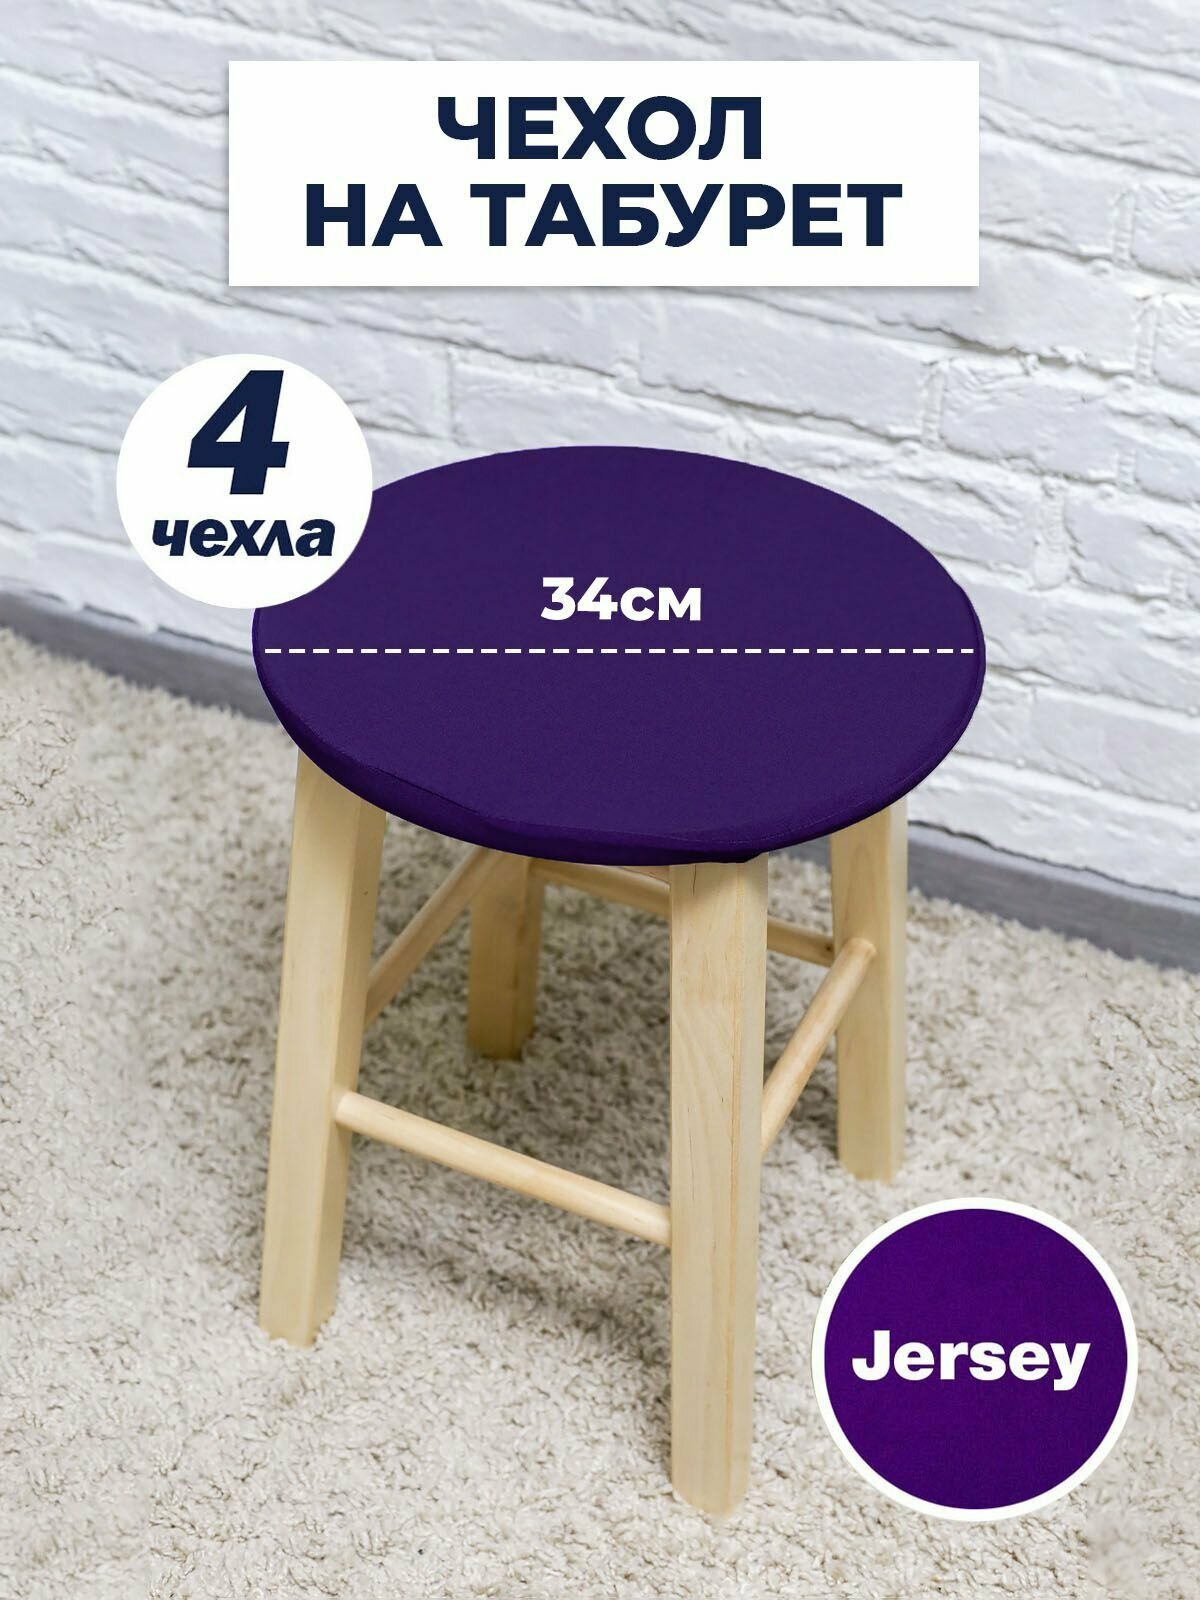 Чехол для табурета, чехол на табурет, на стул без спинки, Коллекция "Jersey" Фиолетовый, Комплект 4 шт.